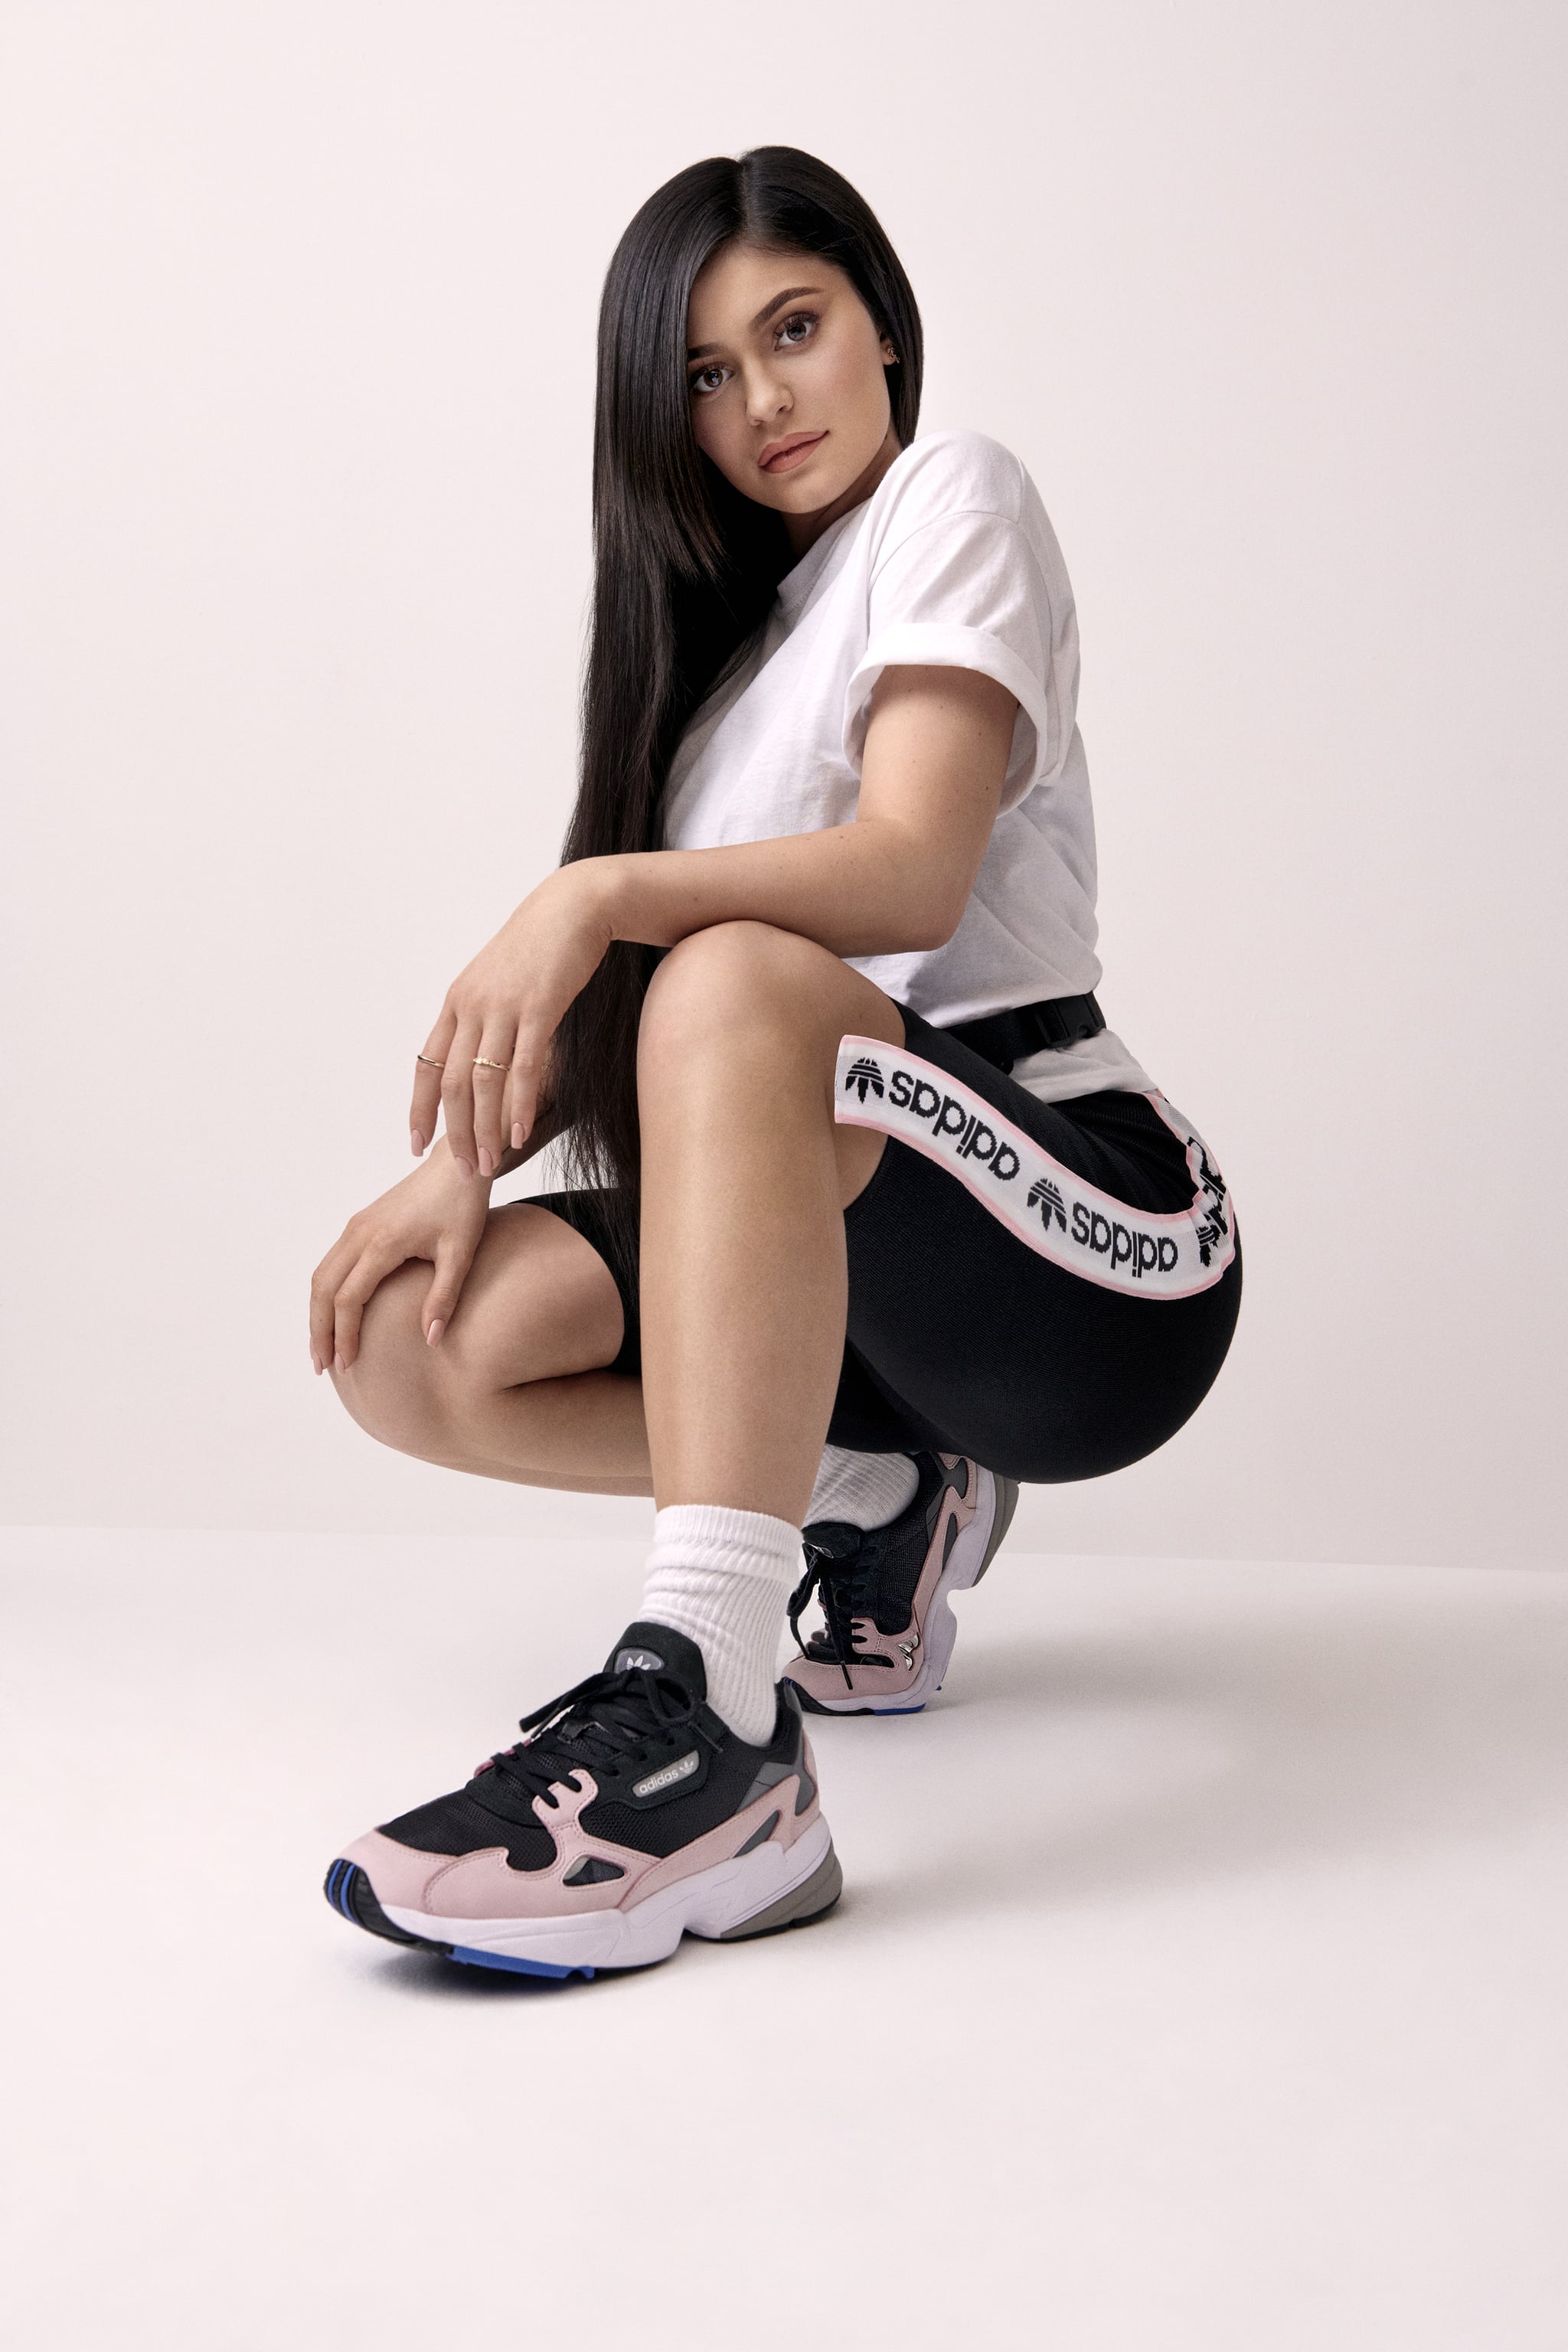 famine Circle Banishment Kylie Jenner Adidas Falcon Sneakers 2018 | POPSUGAR Fashion